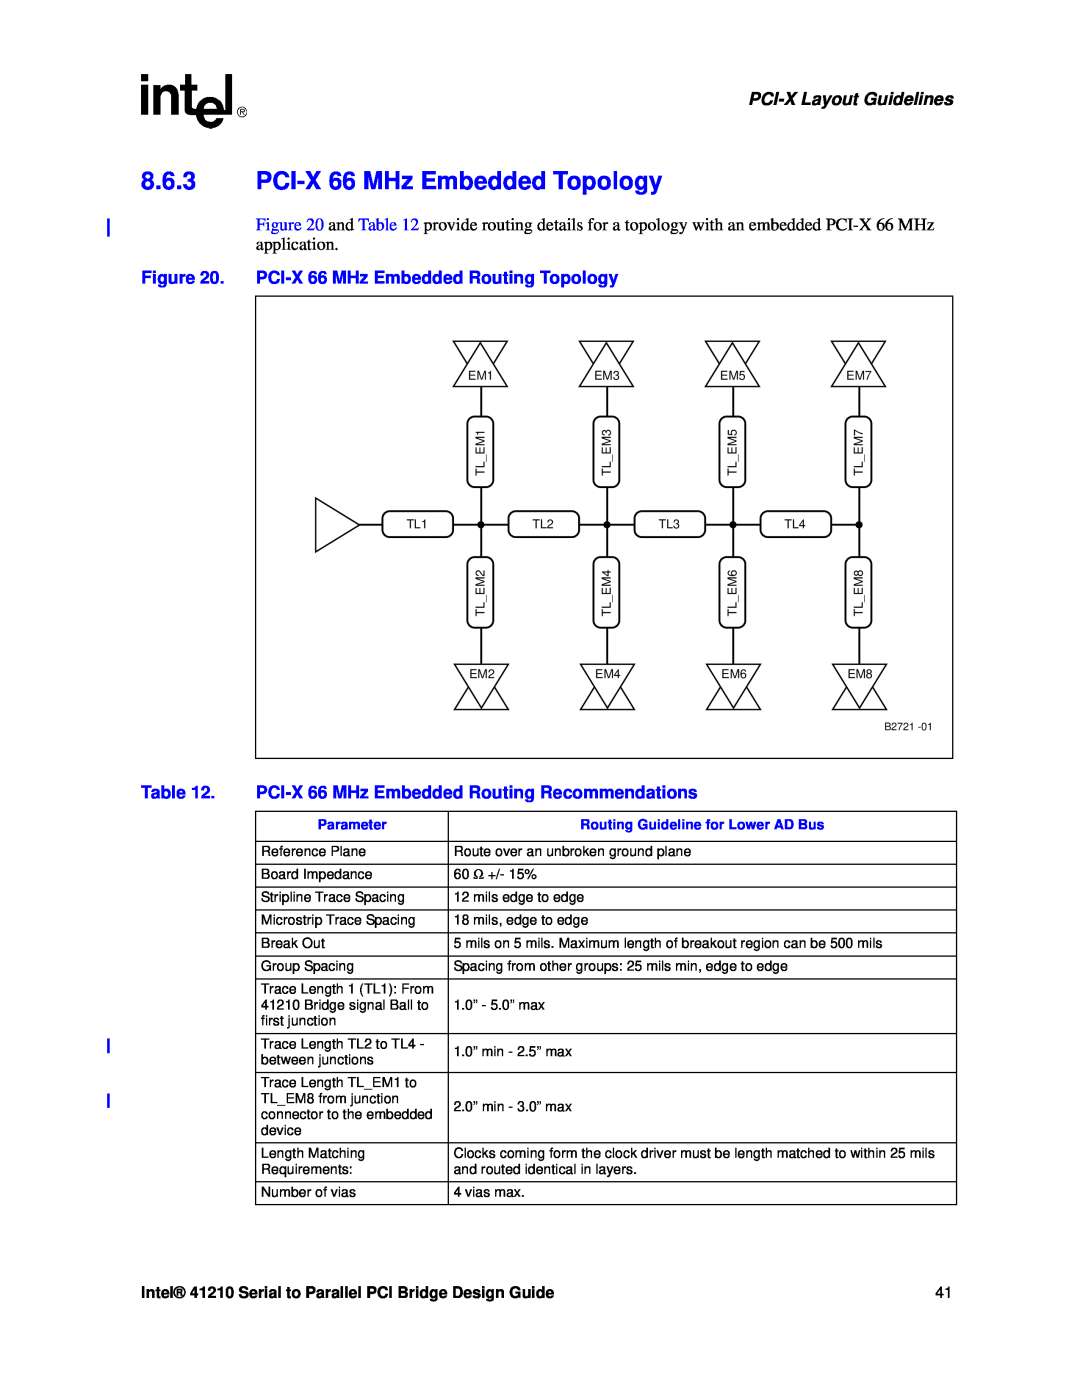 Intel 41210 manual PCI-X 66 MHz Embedded Topology, PCI-X 66 MHz Embedded Routing Topology, PCI-X Layout Guidelines 